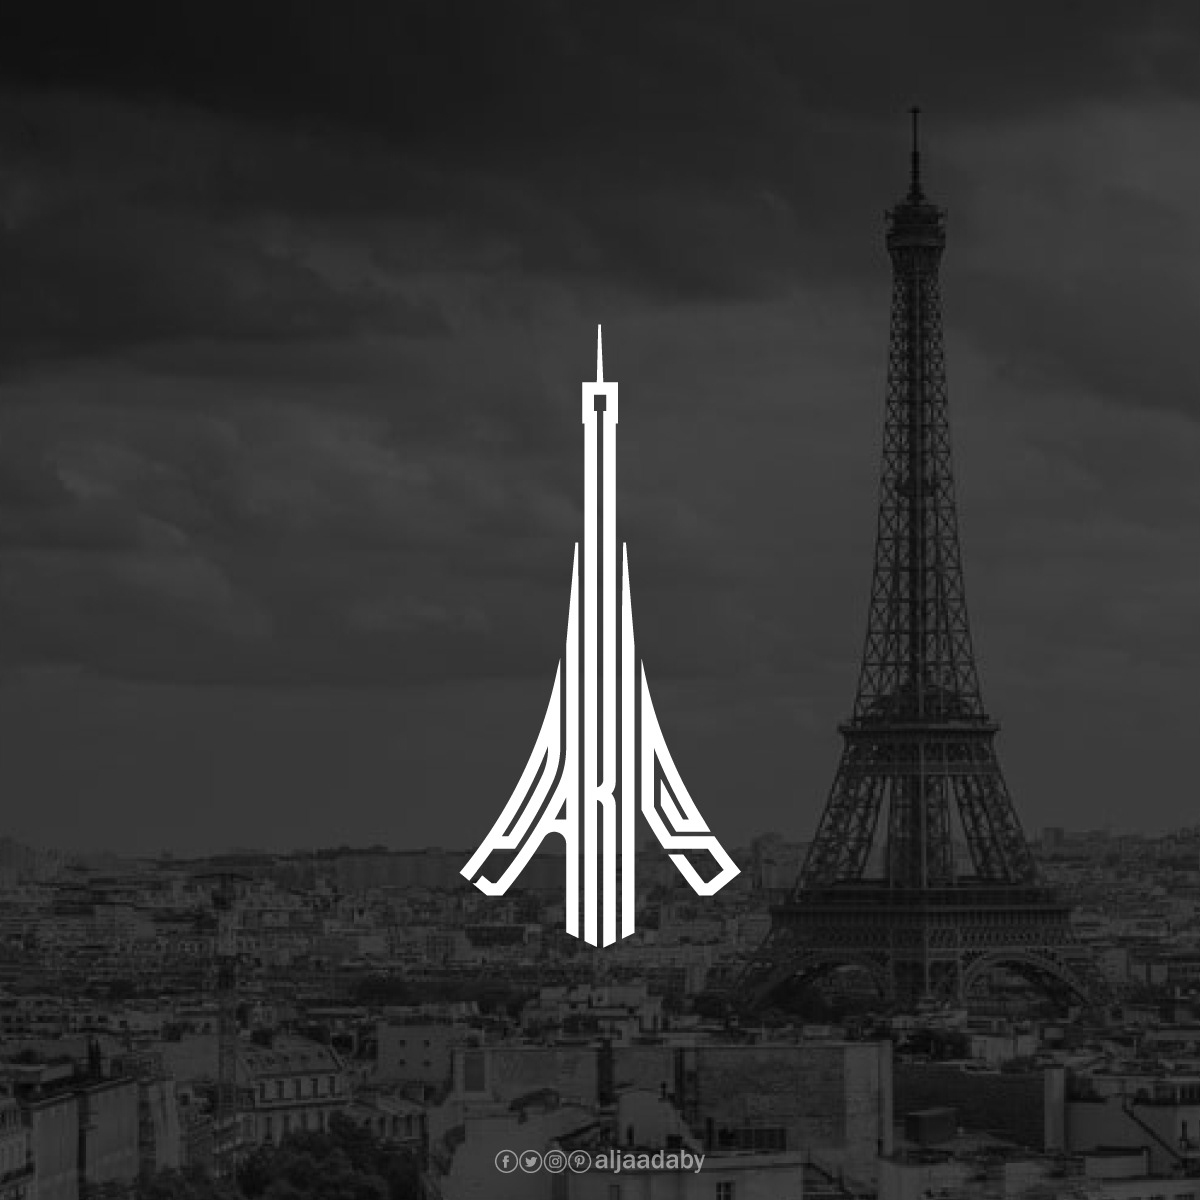 Typographic city logos based on their famous landmarks - Paris (Eiffel Tower)